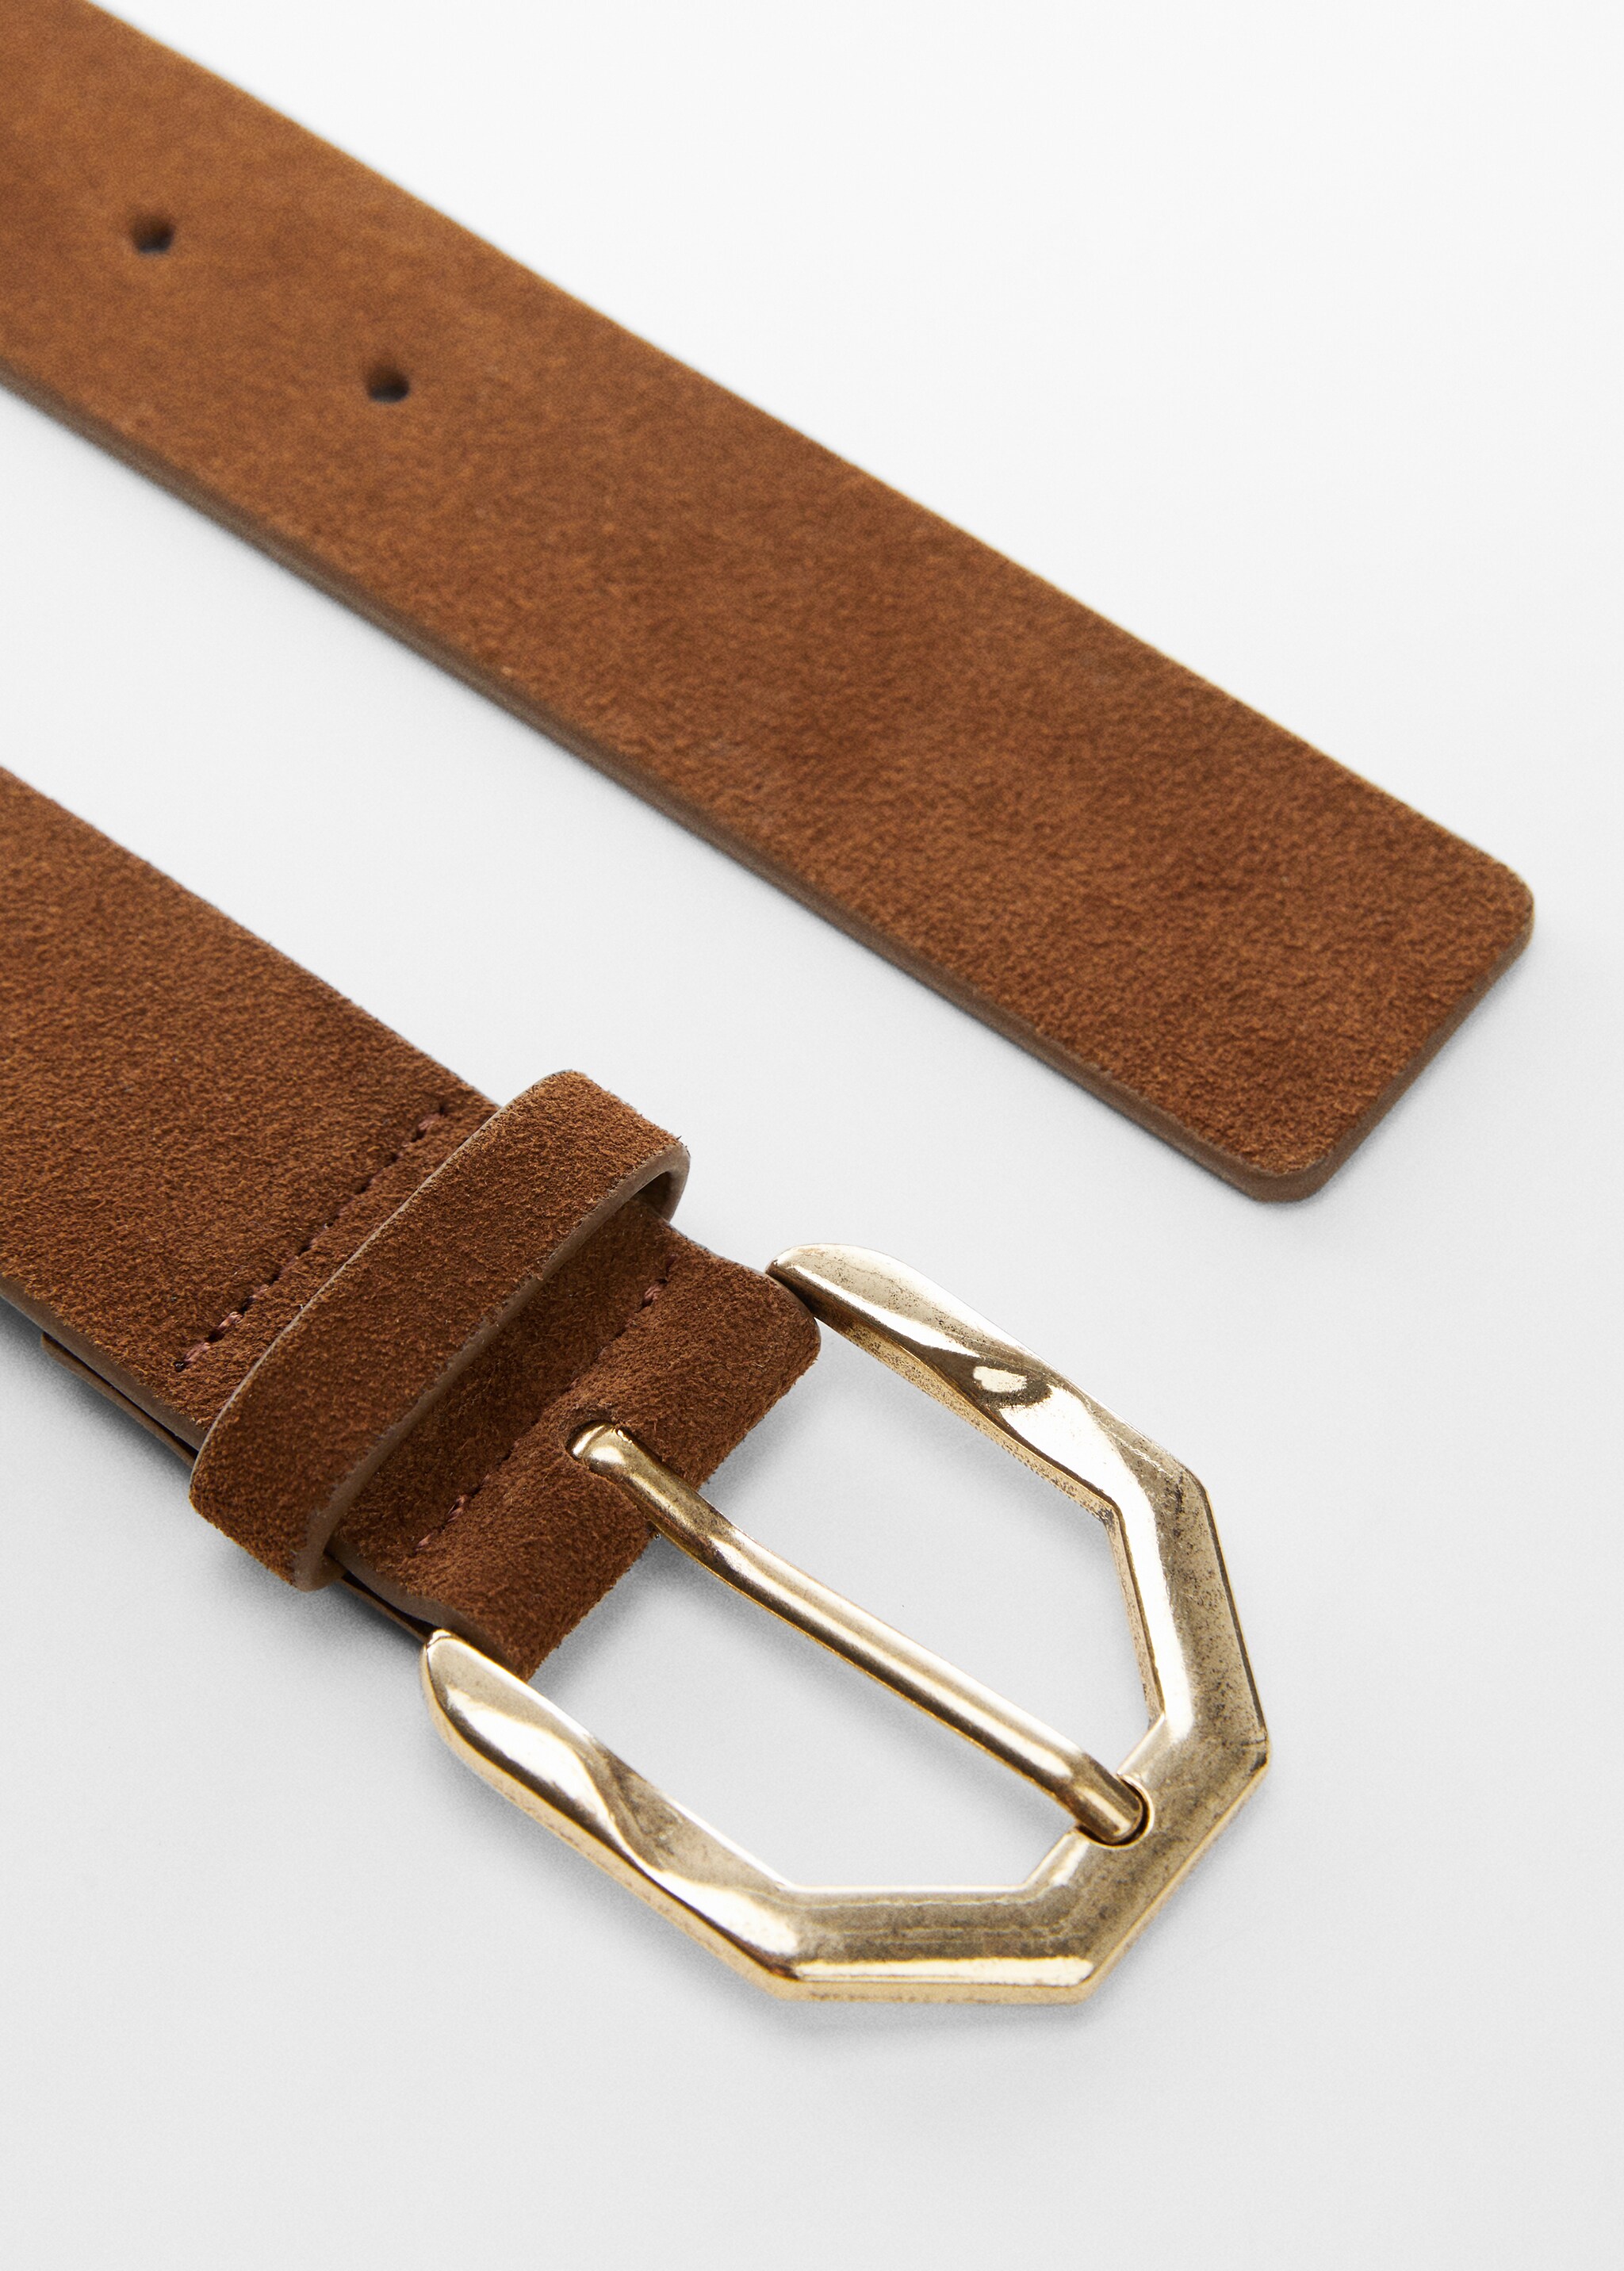 Irregular buckle leather belt - Medium plane